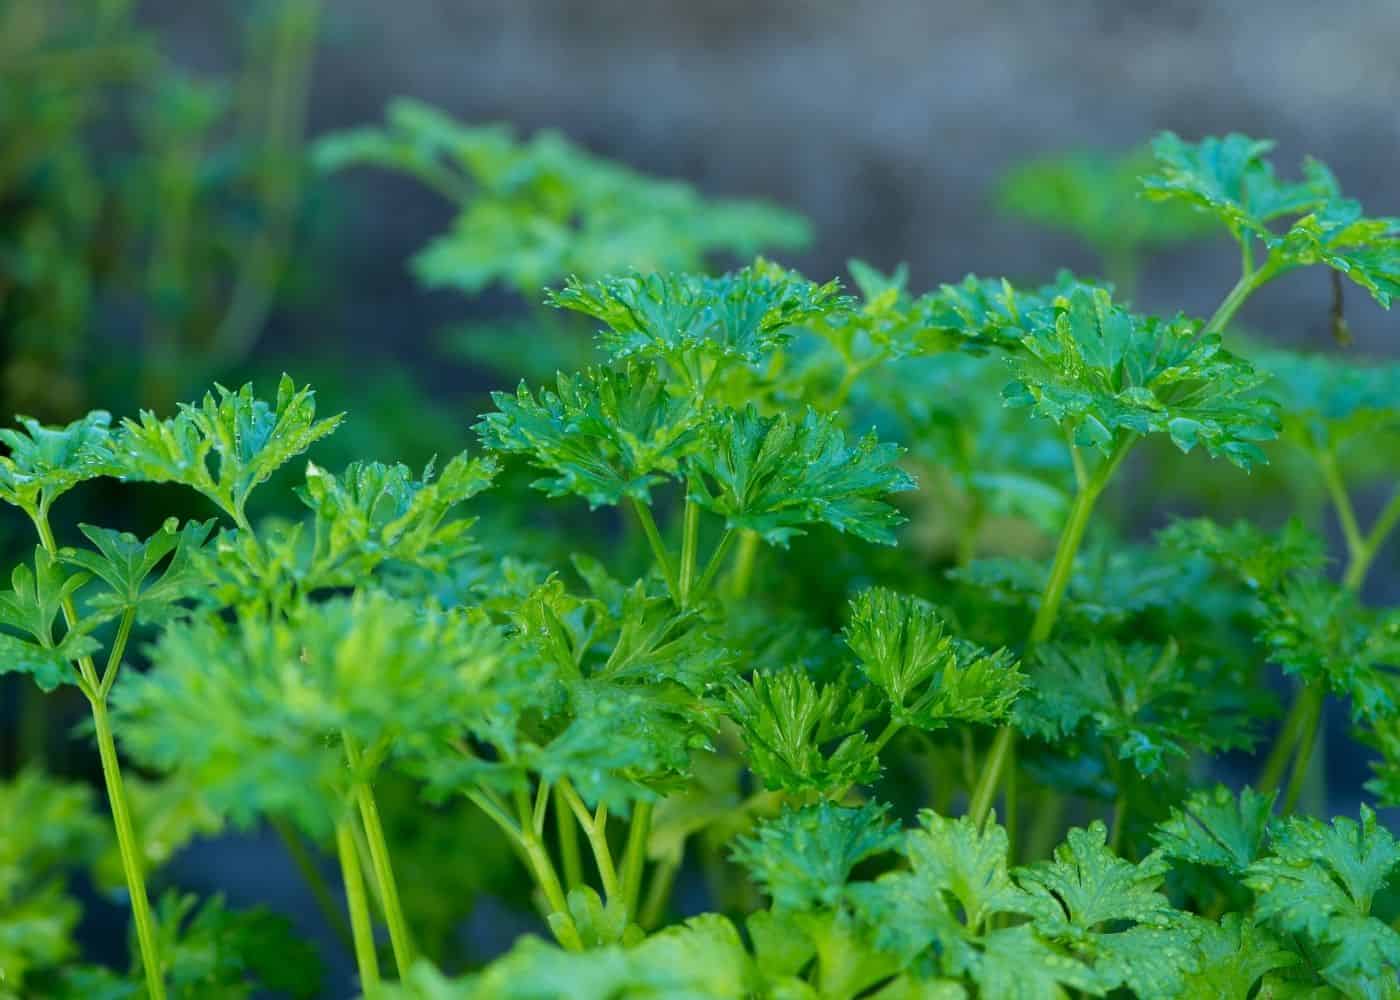 Parsley - companion plants for potatoes